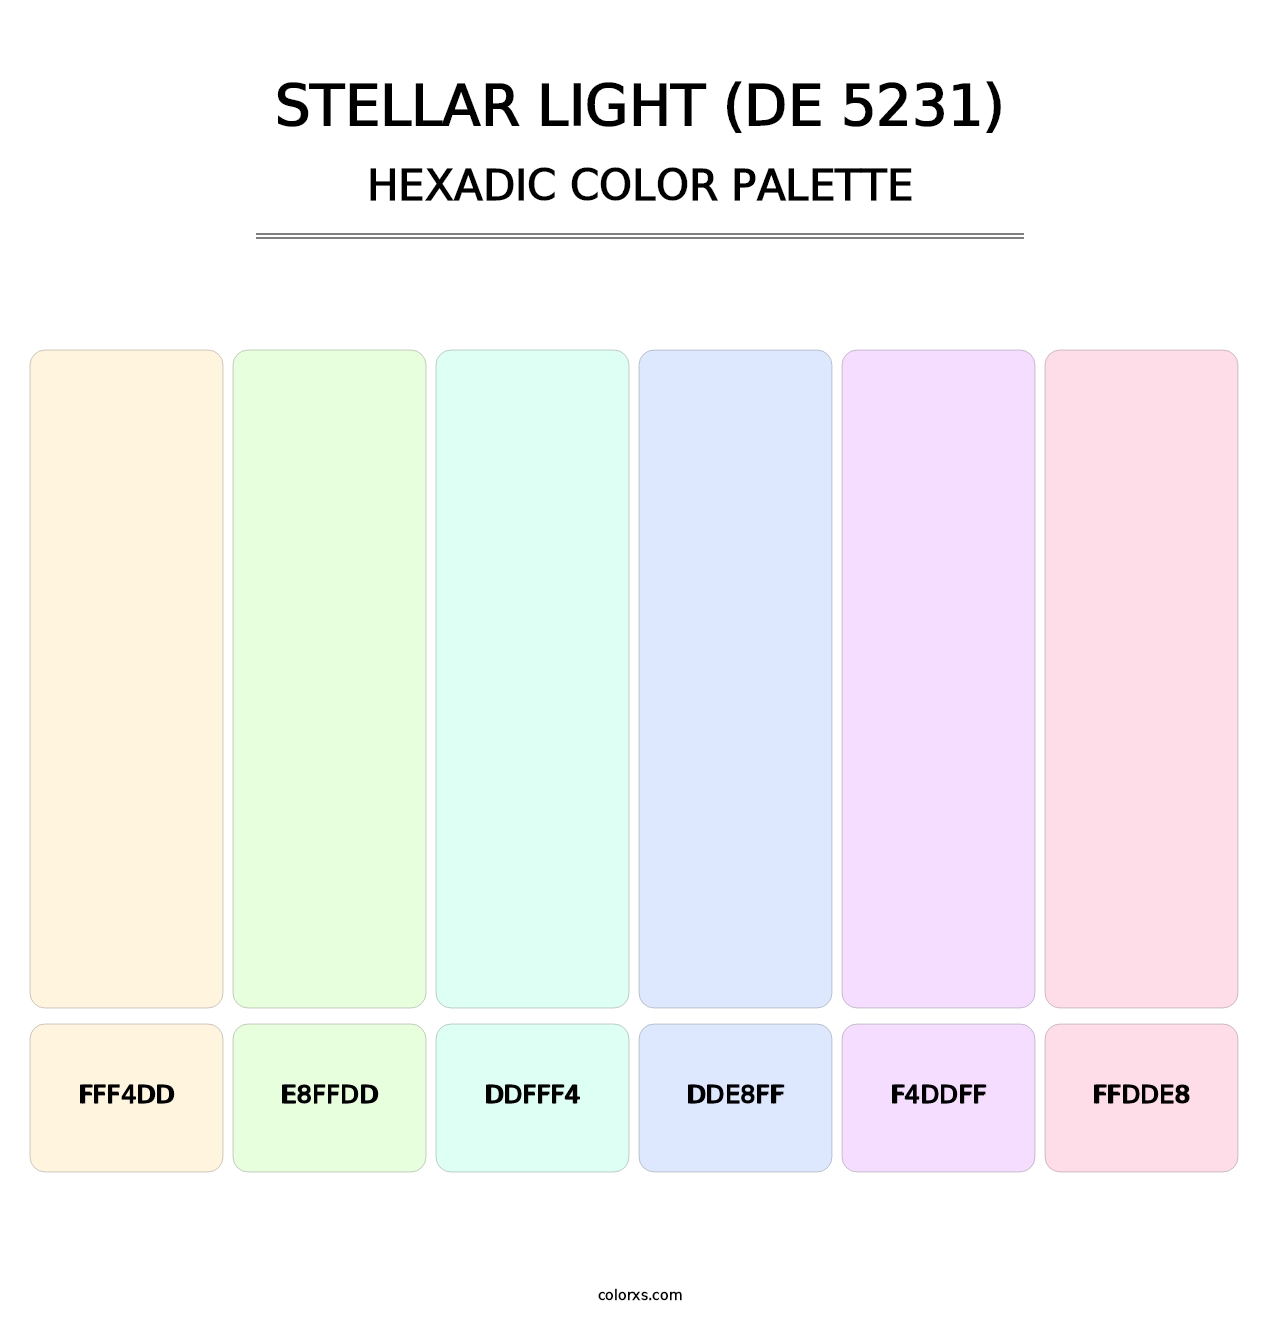 Stellar Light (DE 5231) - Hexadic Color Palette